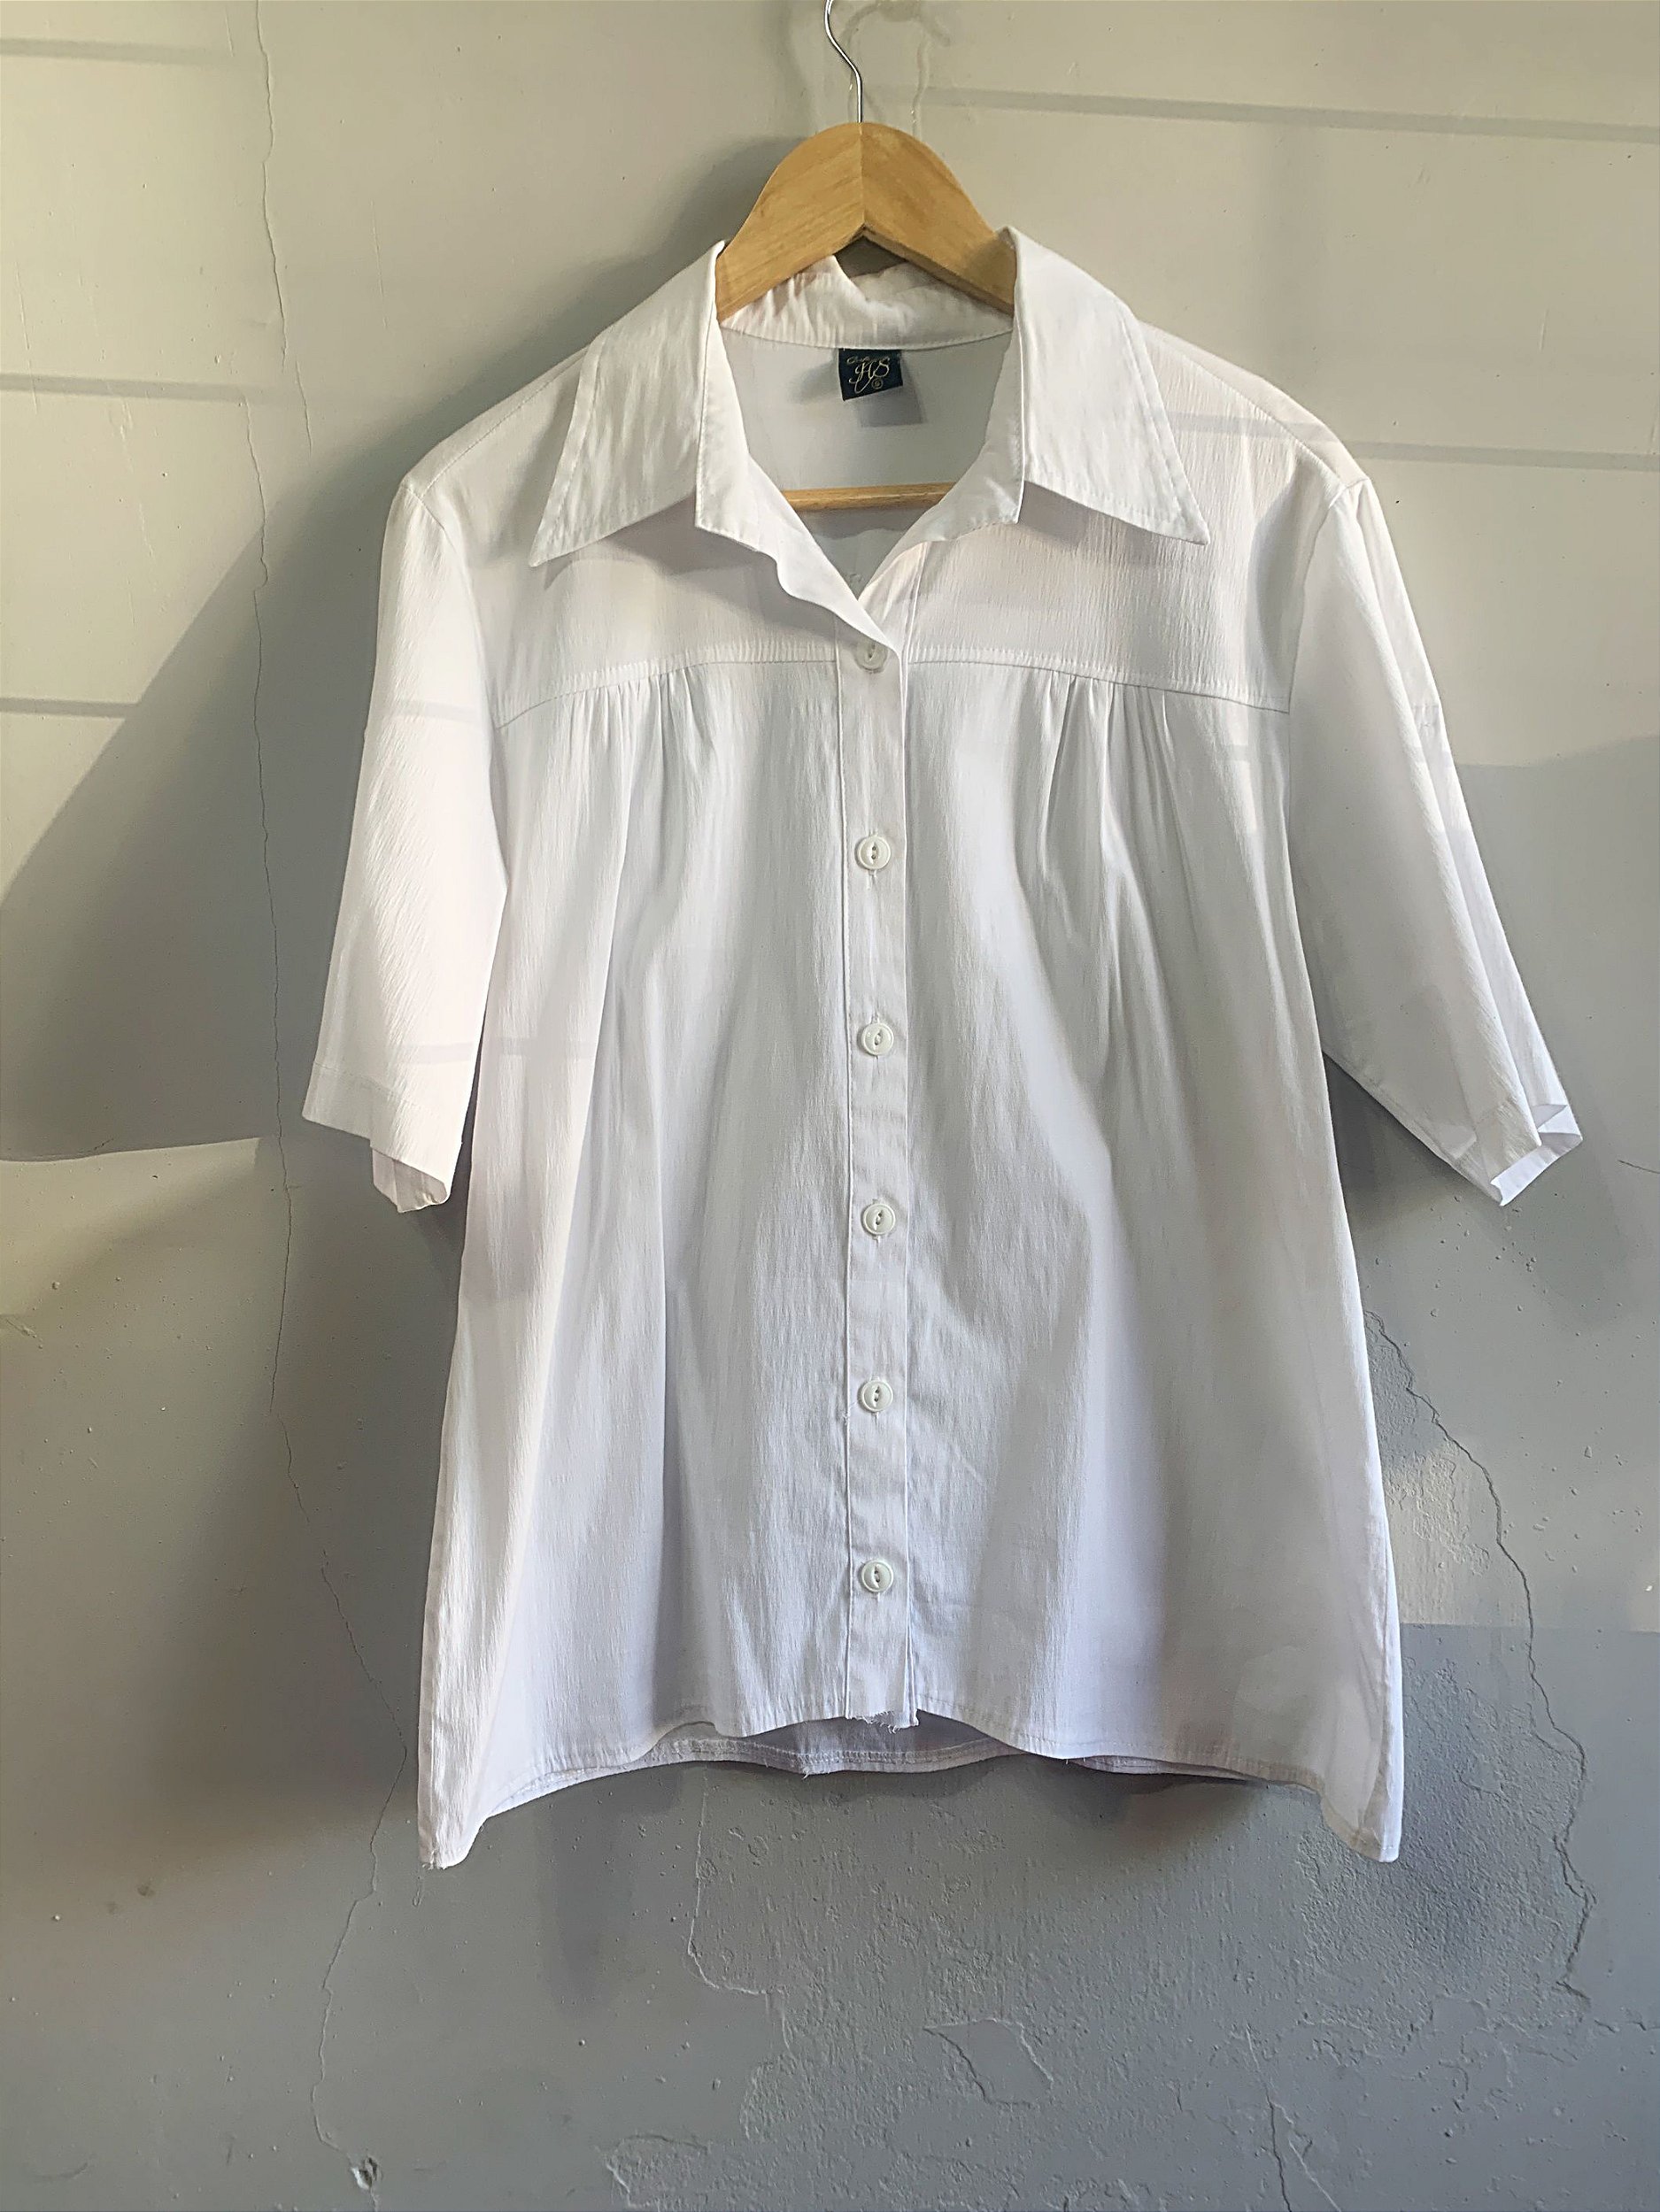 Camisa branca manga curta Grife HS G - Brechó XL - Brechó Plus Size